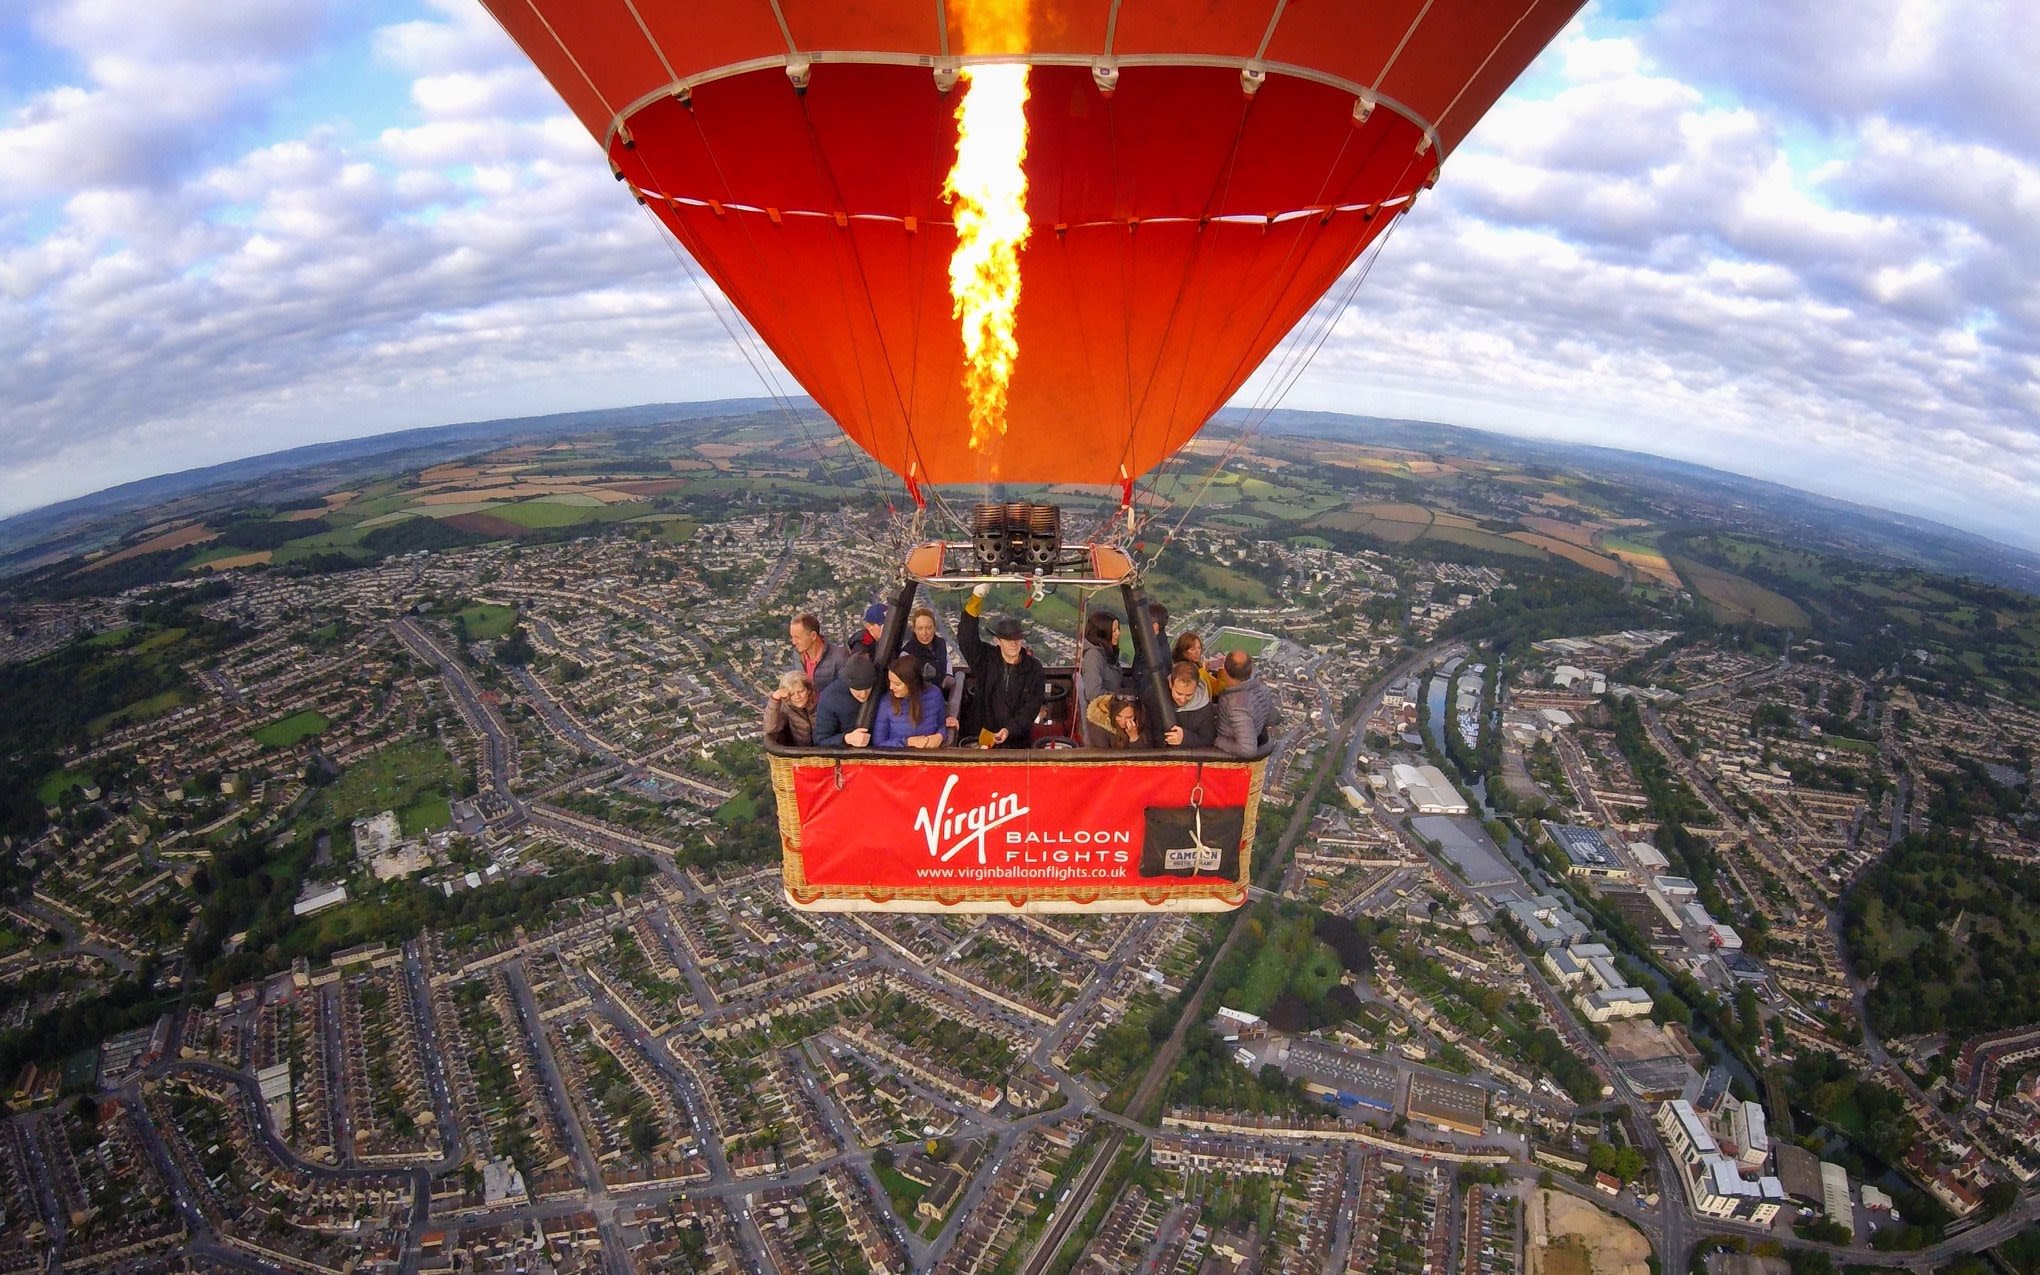 Virgin Balloons flight group hot air balloon photo from 2019